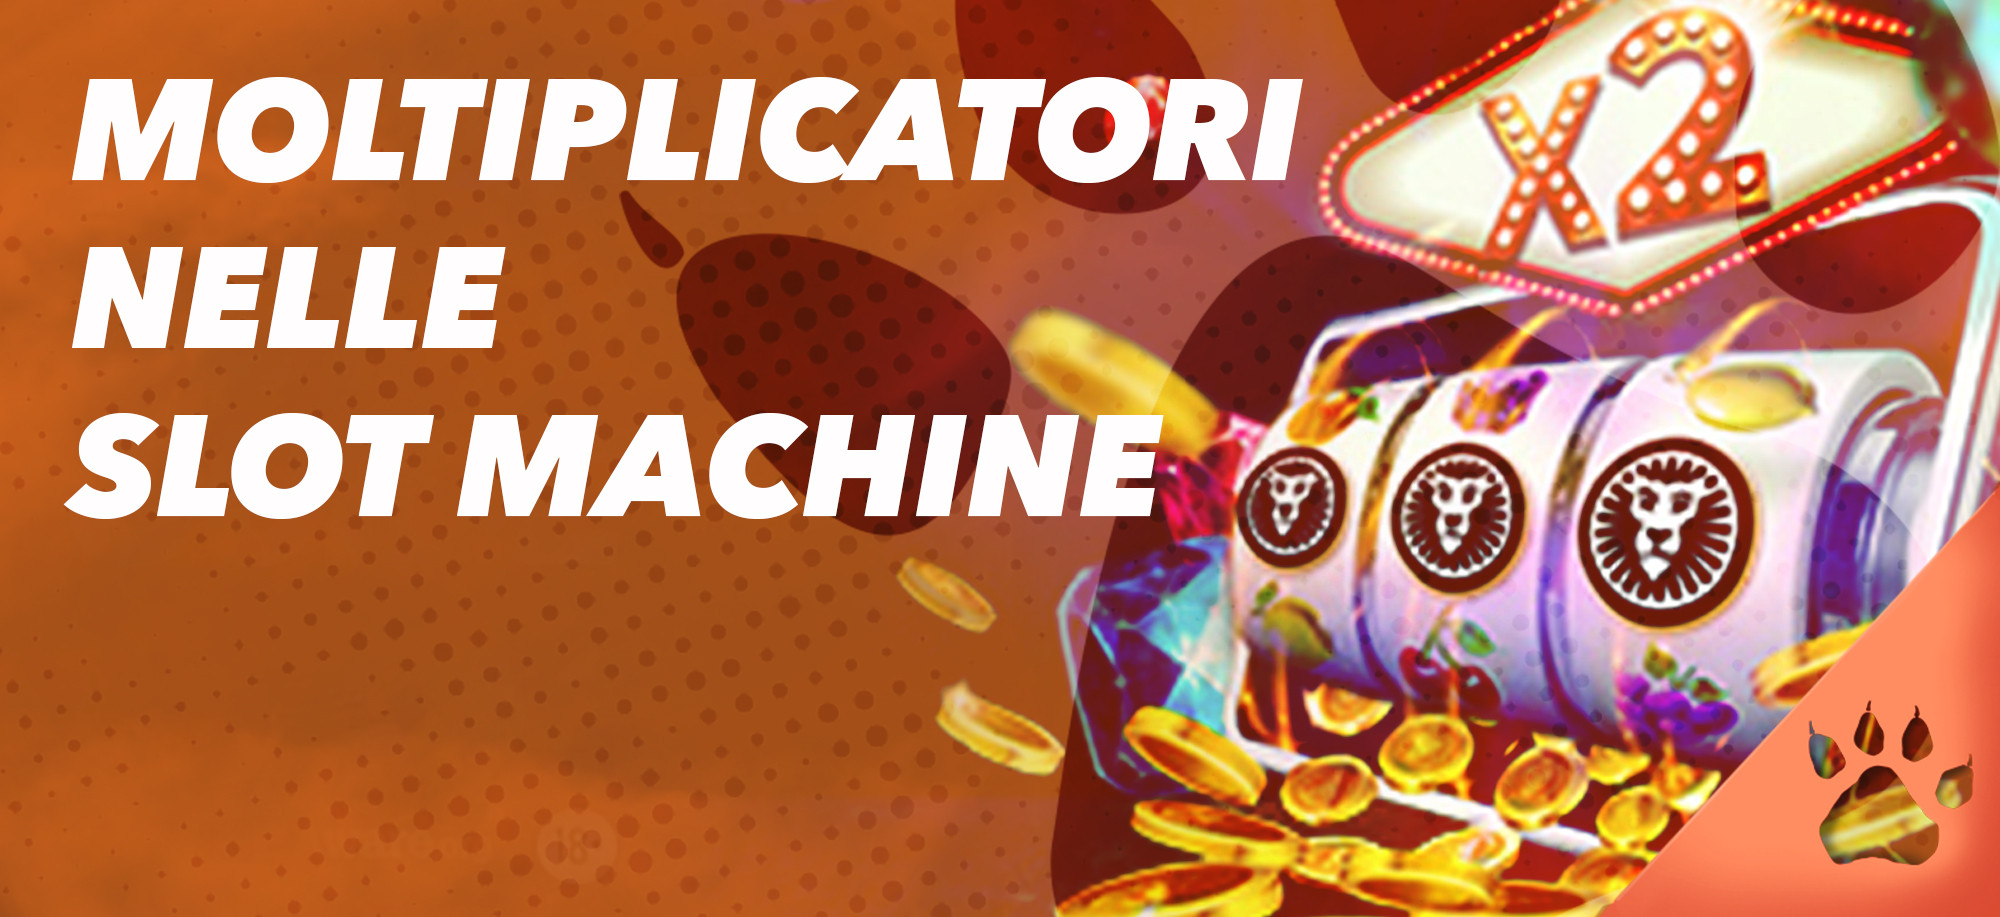 Moltiplicatori Slot Machine - La Guida Completa 2023 | News & Blog LeoVegas Casinò